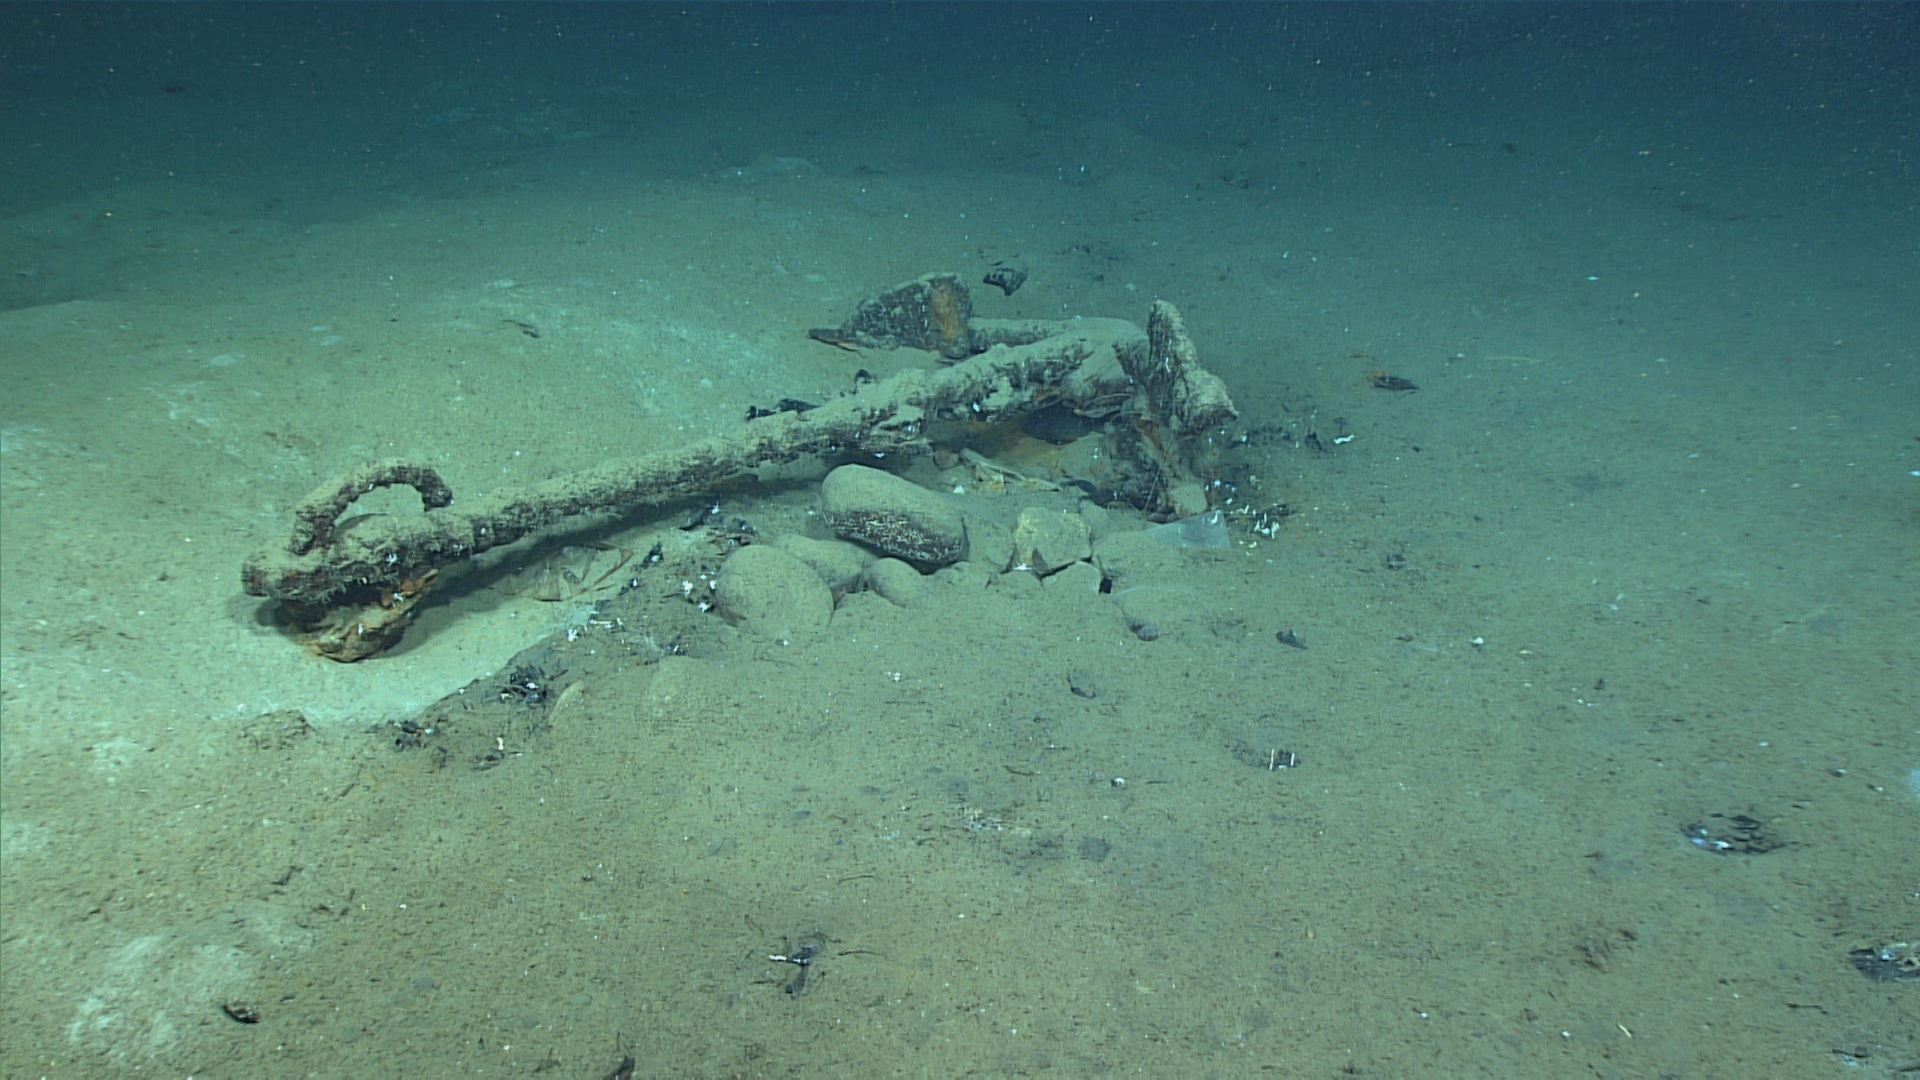 Shipwreck-15563-Stern